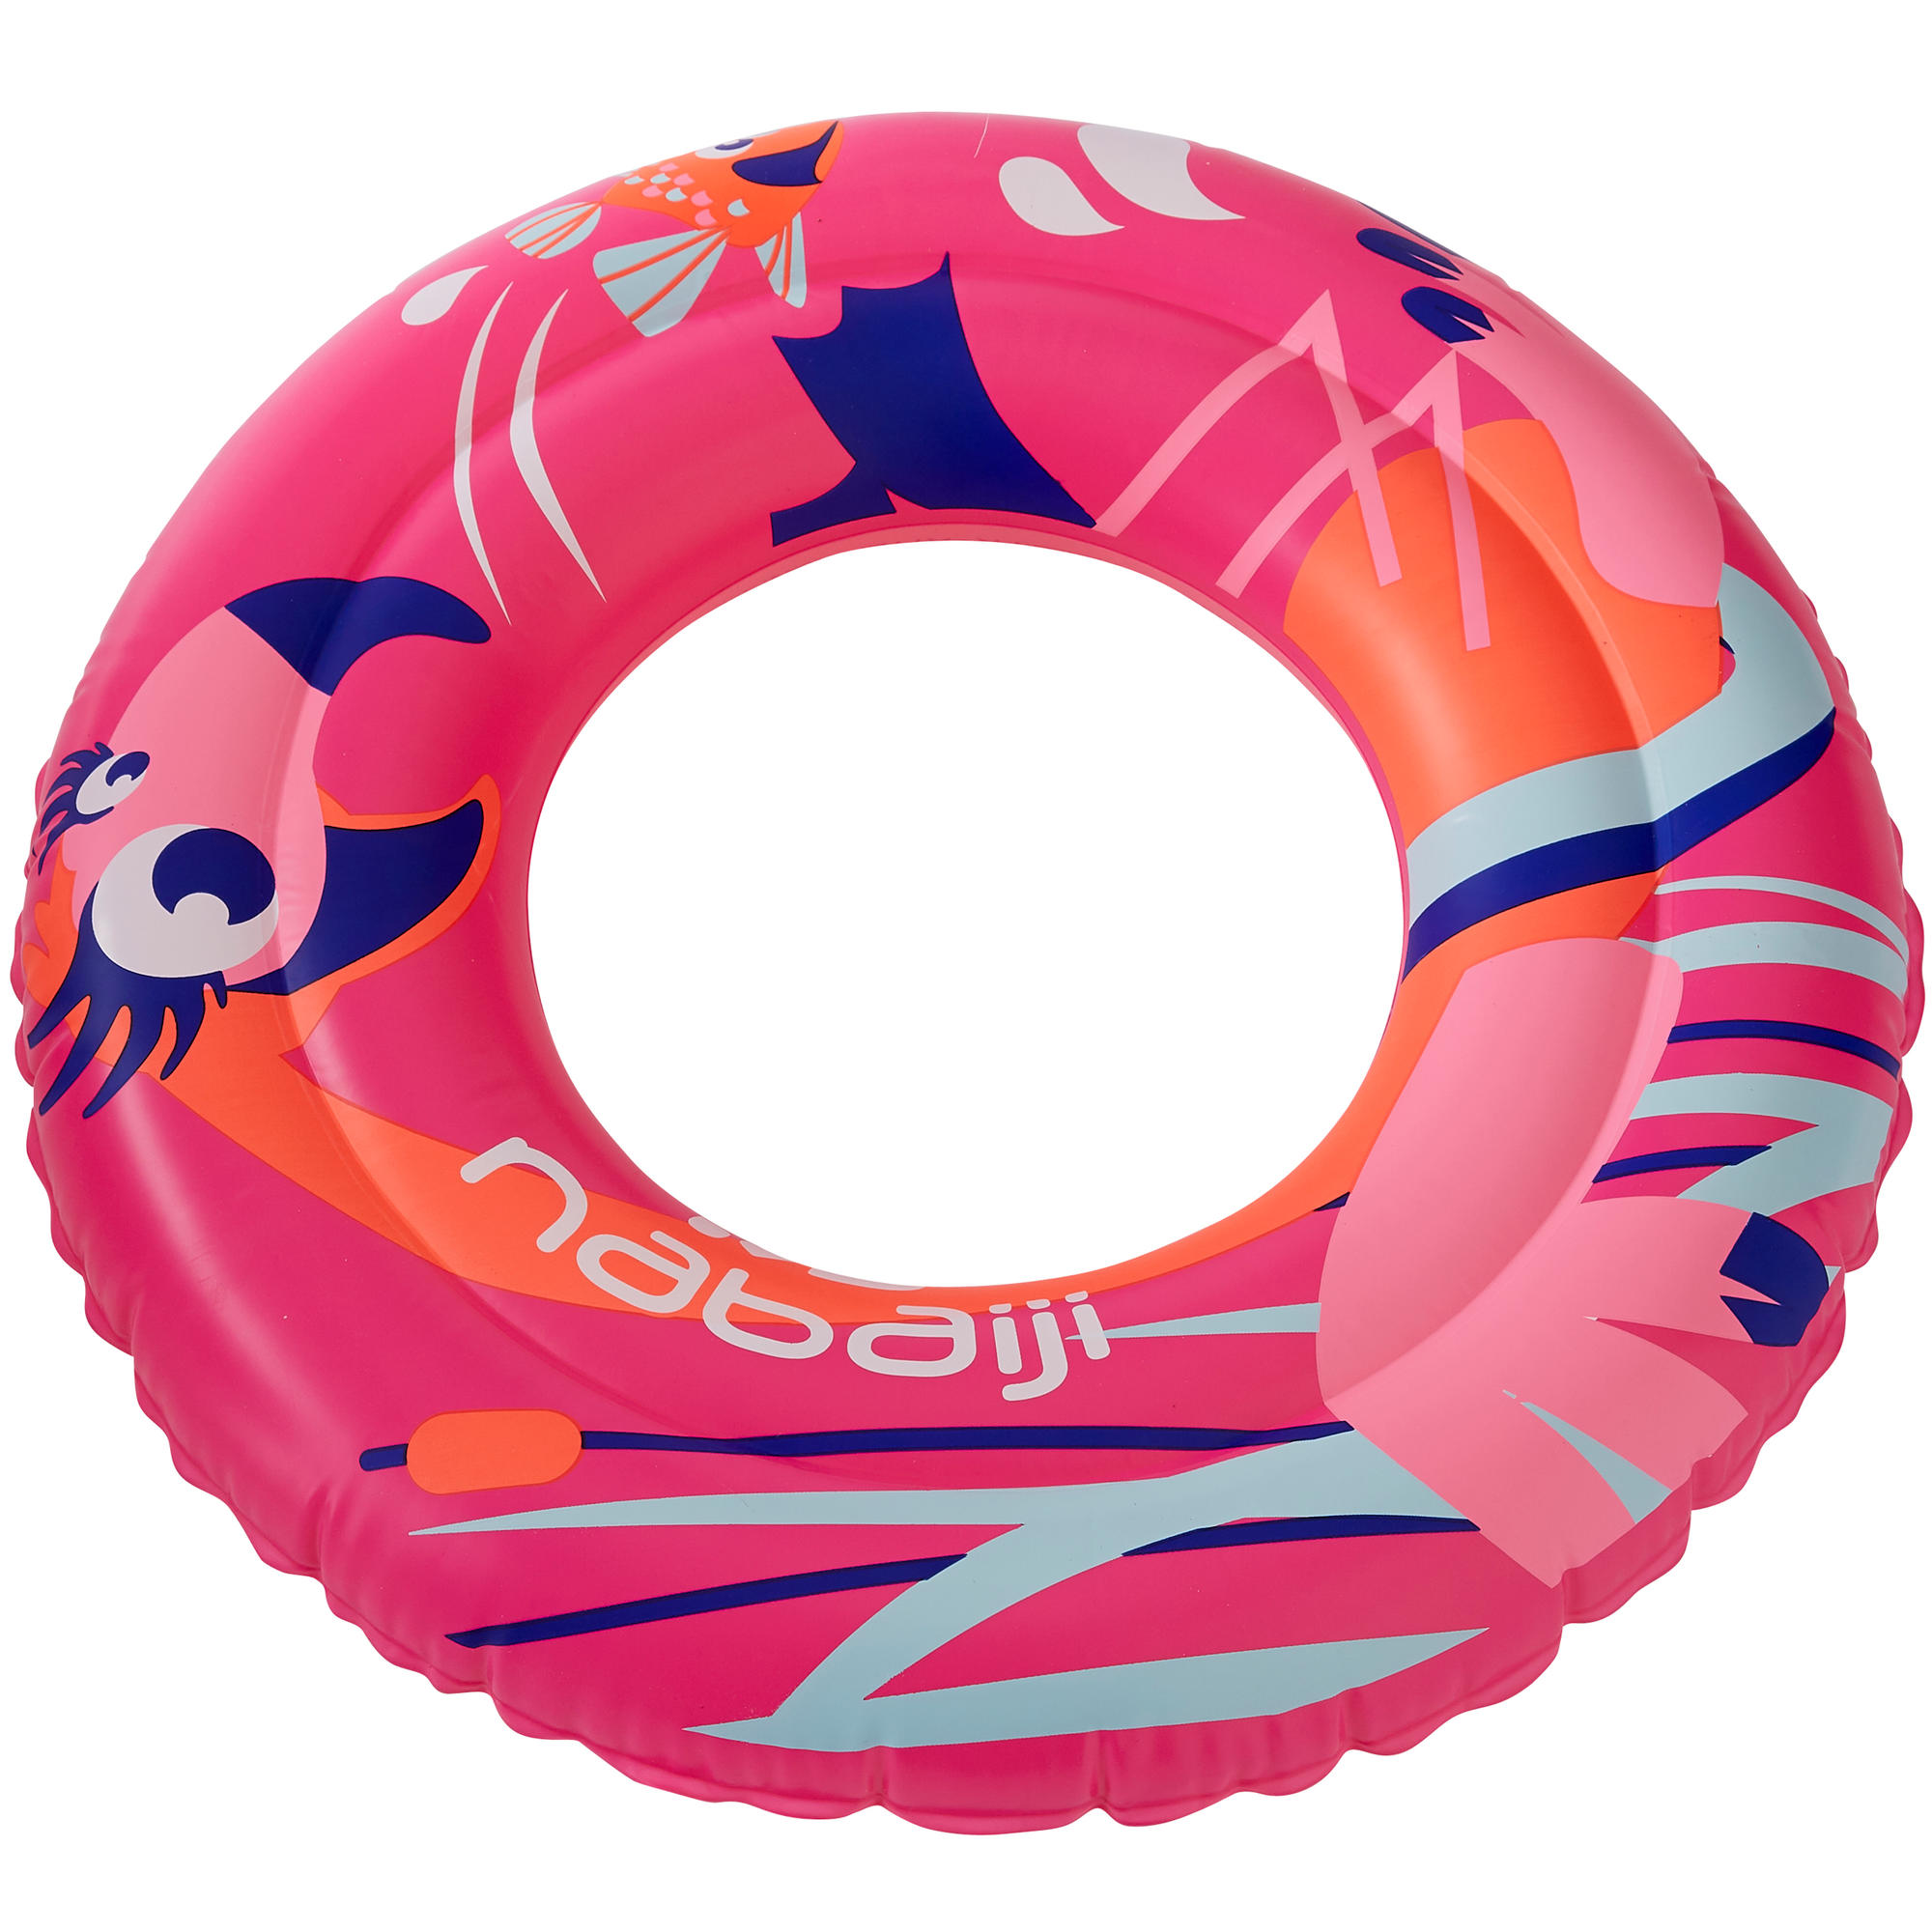 Children's inflatable swim ring 3-6 